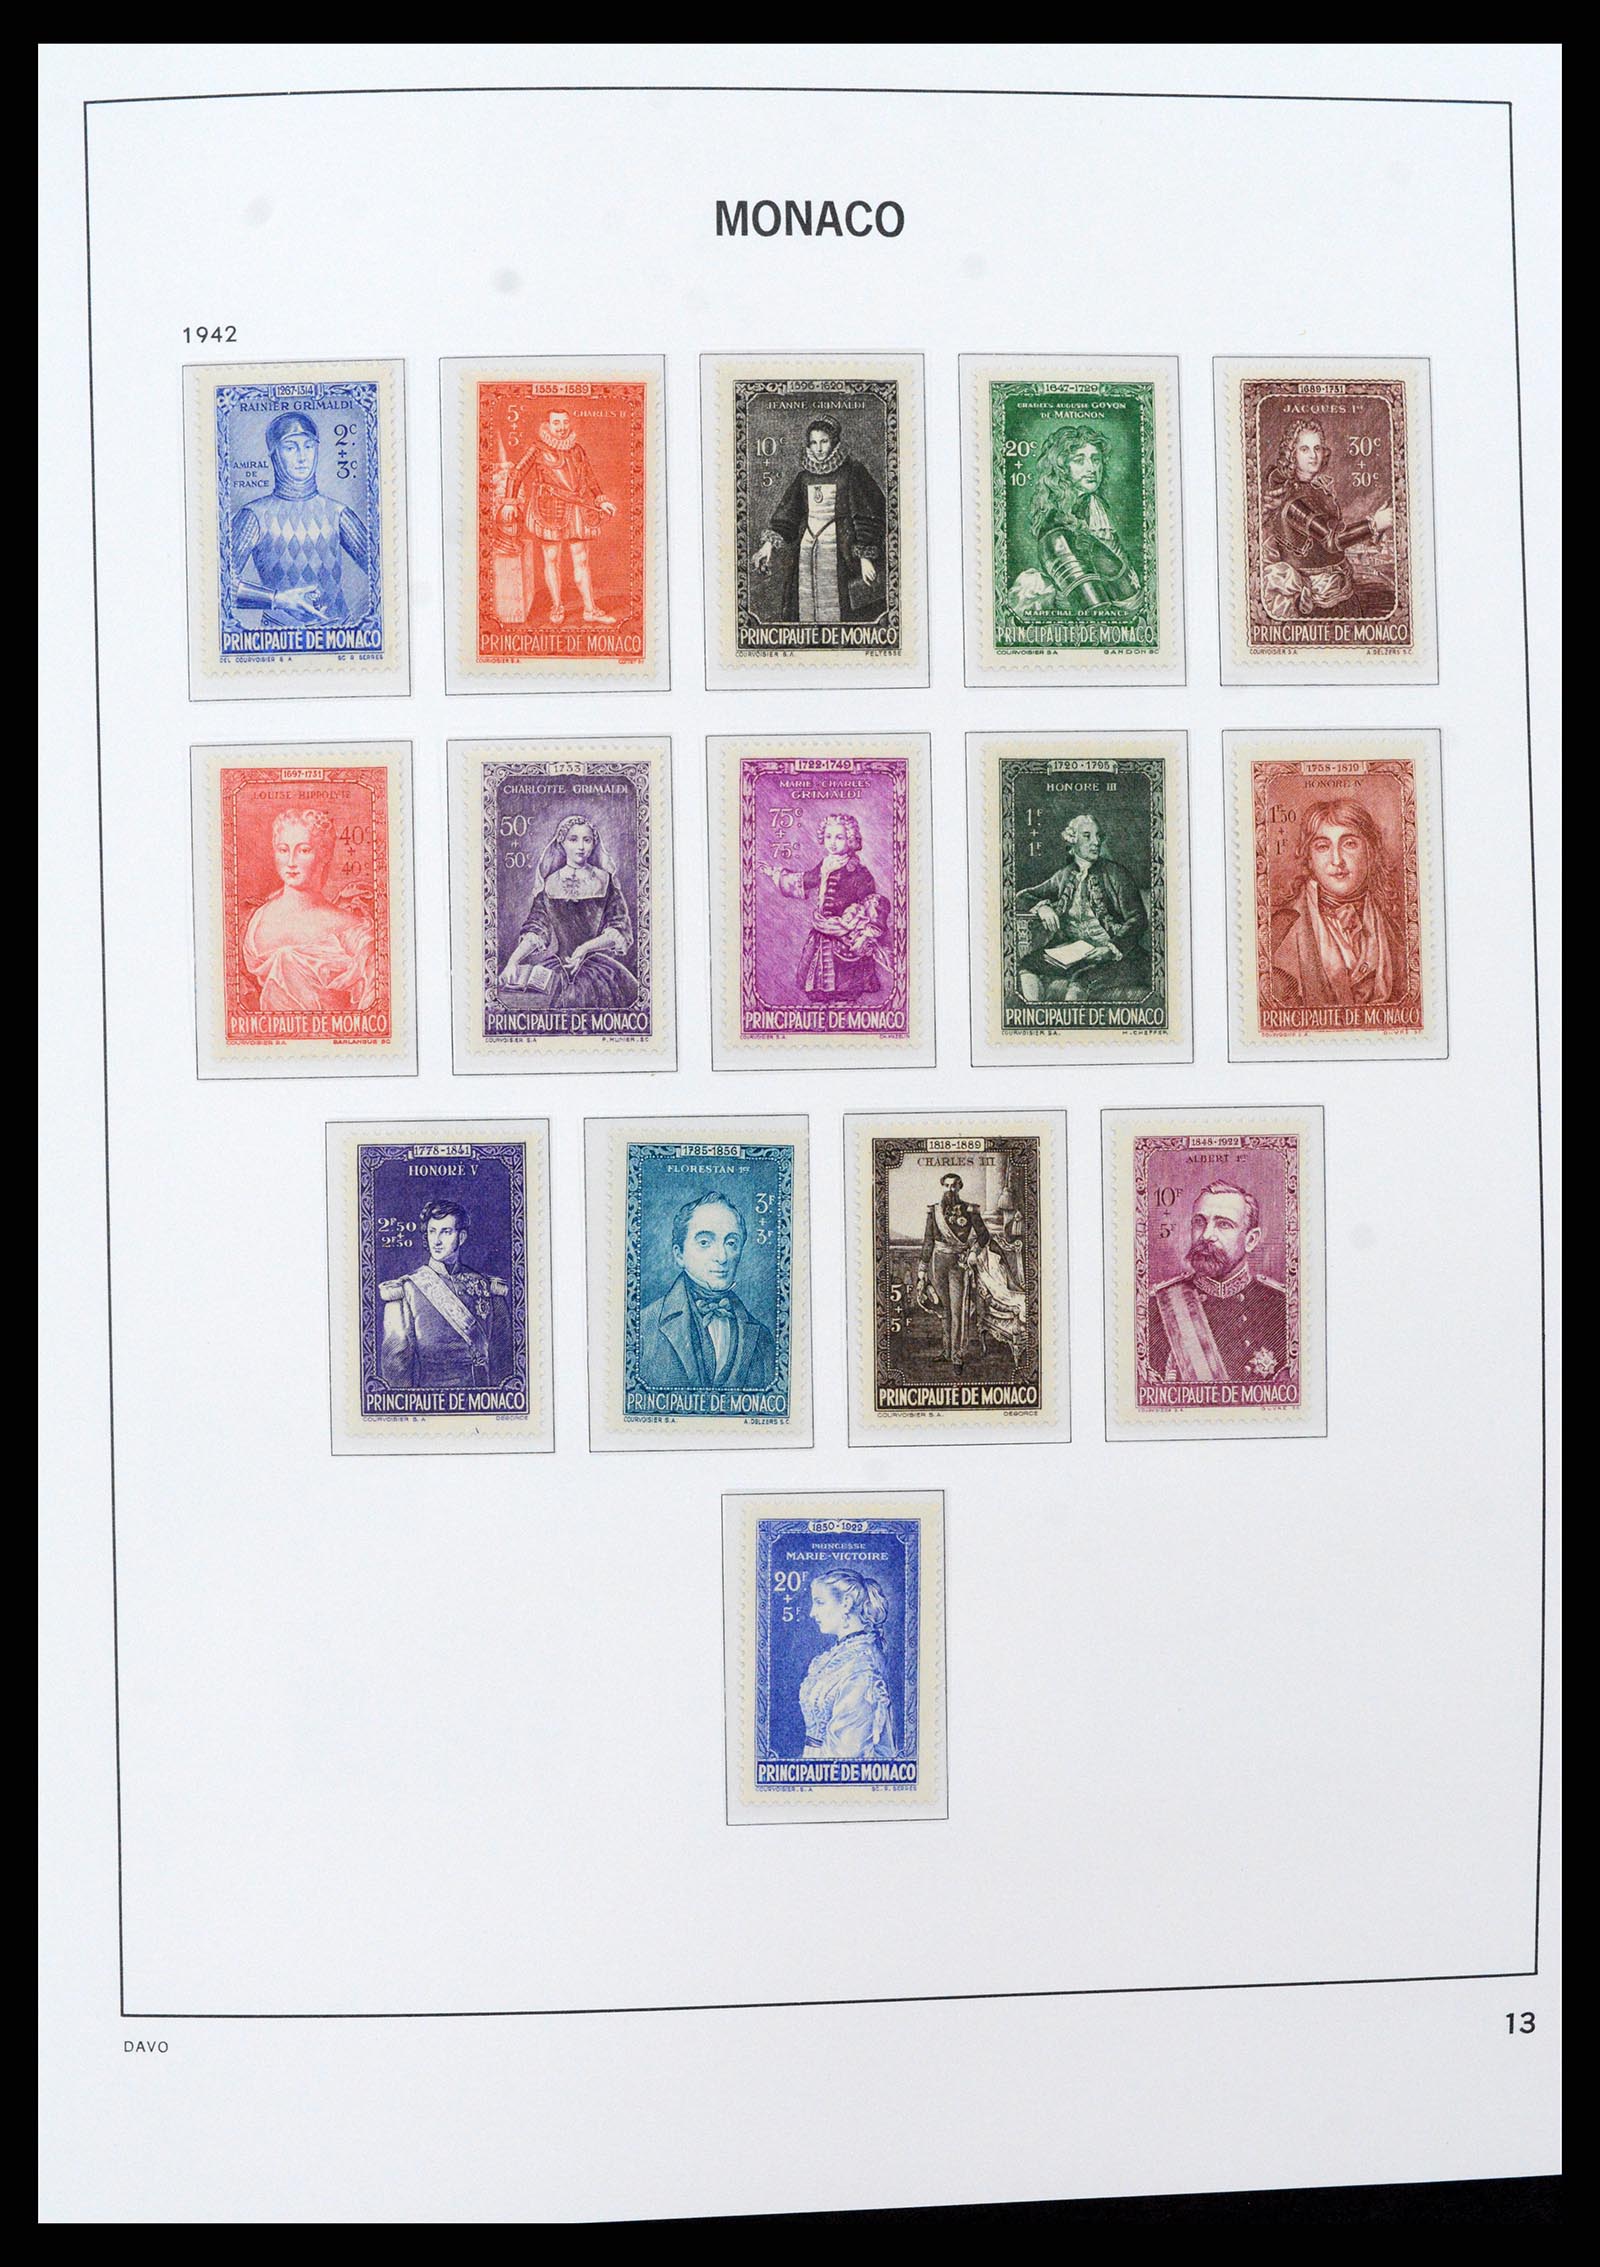 37279 013 - Stamp collection 37279 Monaco 1885-1969.